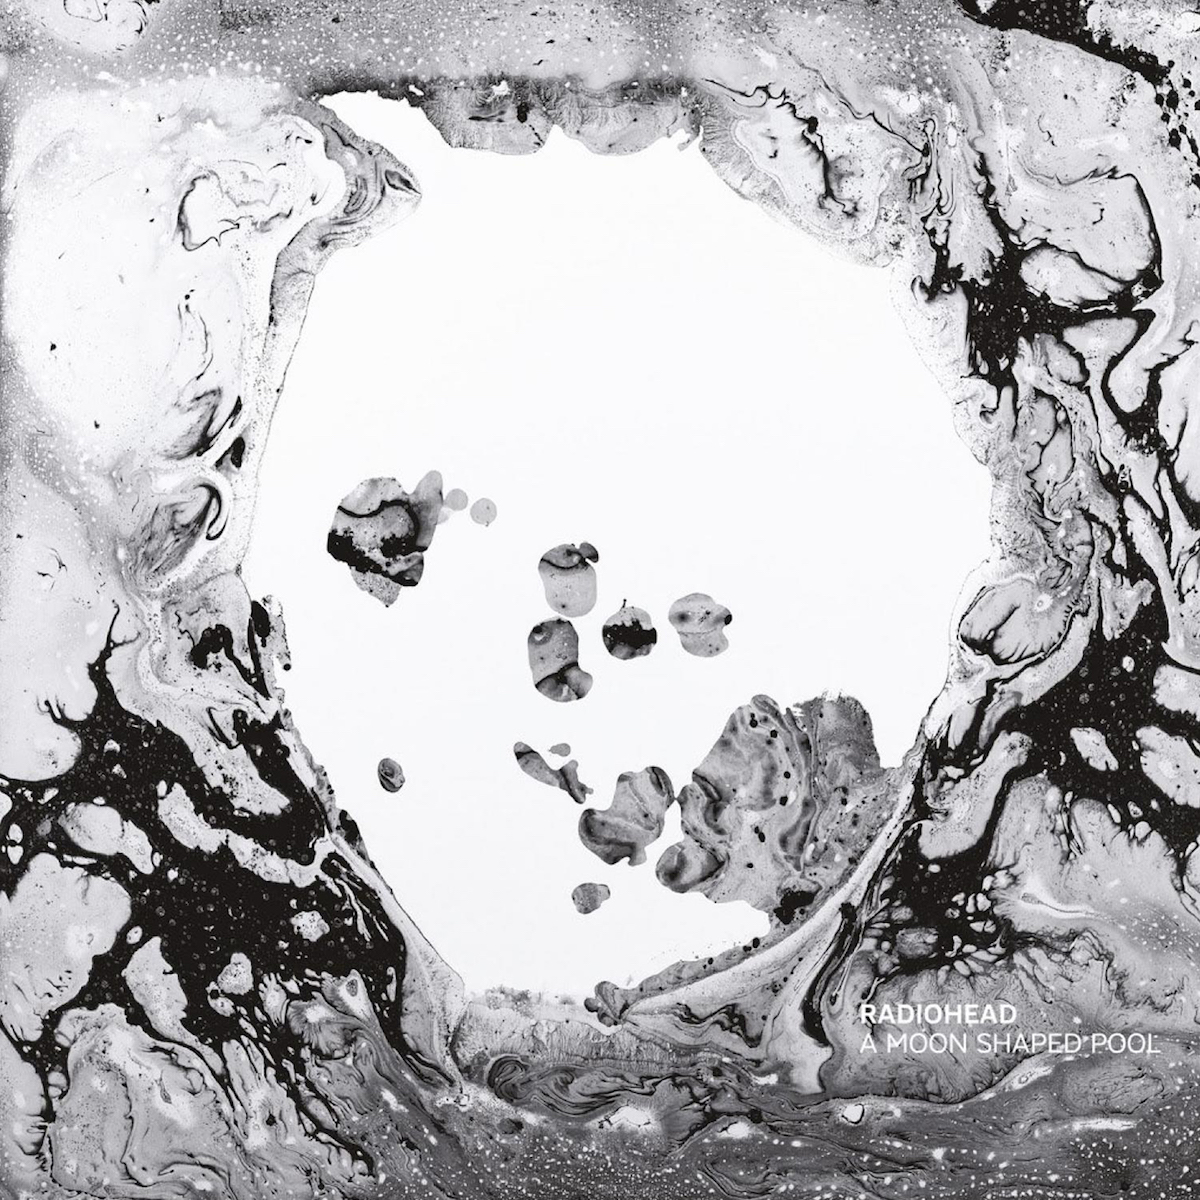 Radiohead: A Moon Shaped Pool (2016) Book Cover